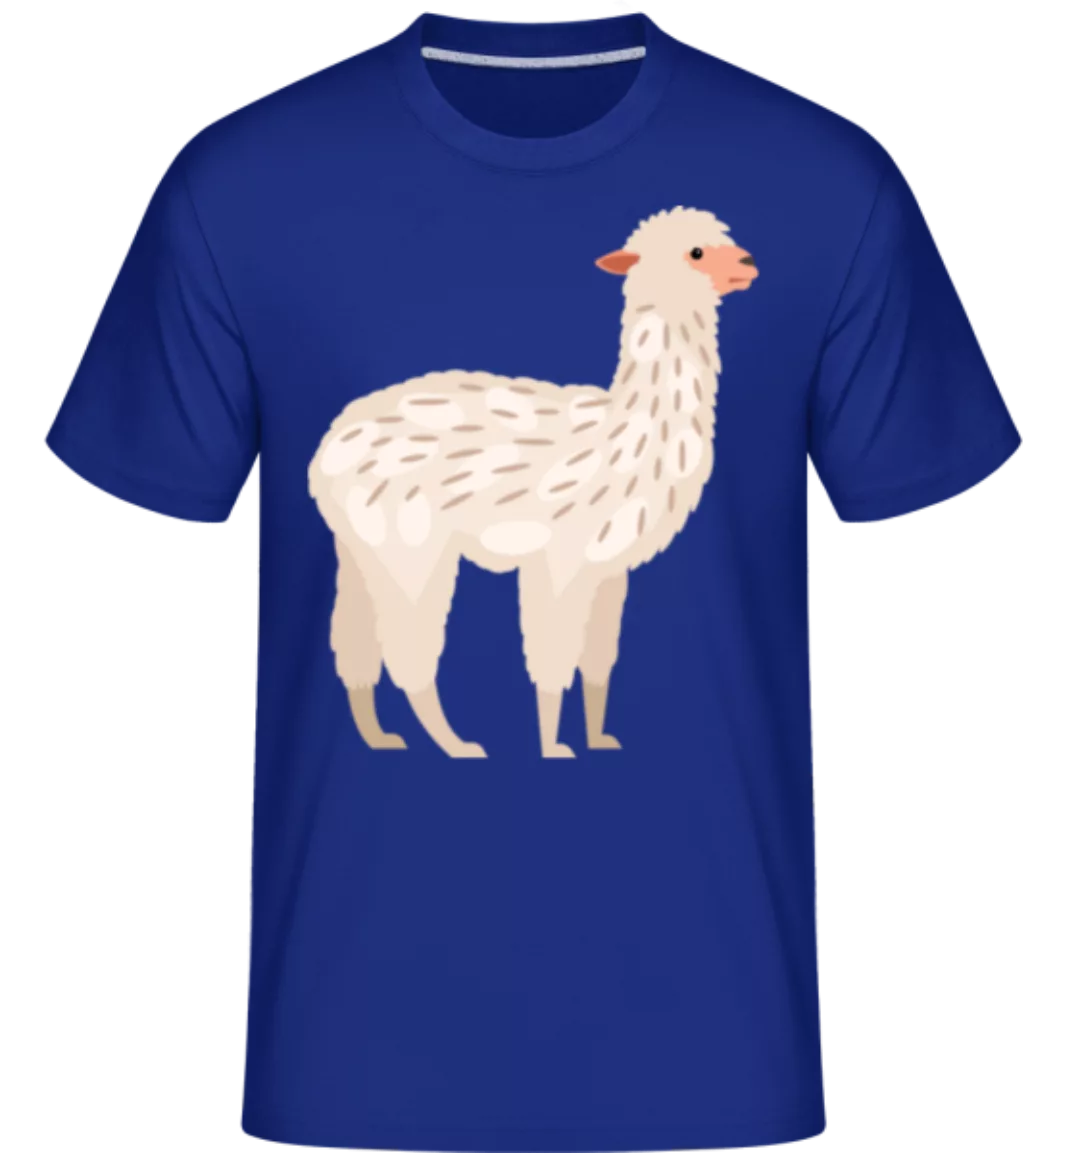 Alpaka · Shirtinator Männer T-Shirt günstig online kaufen